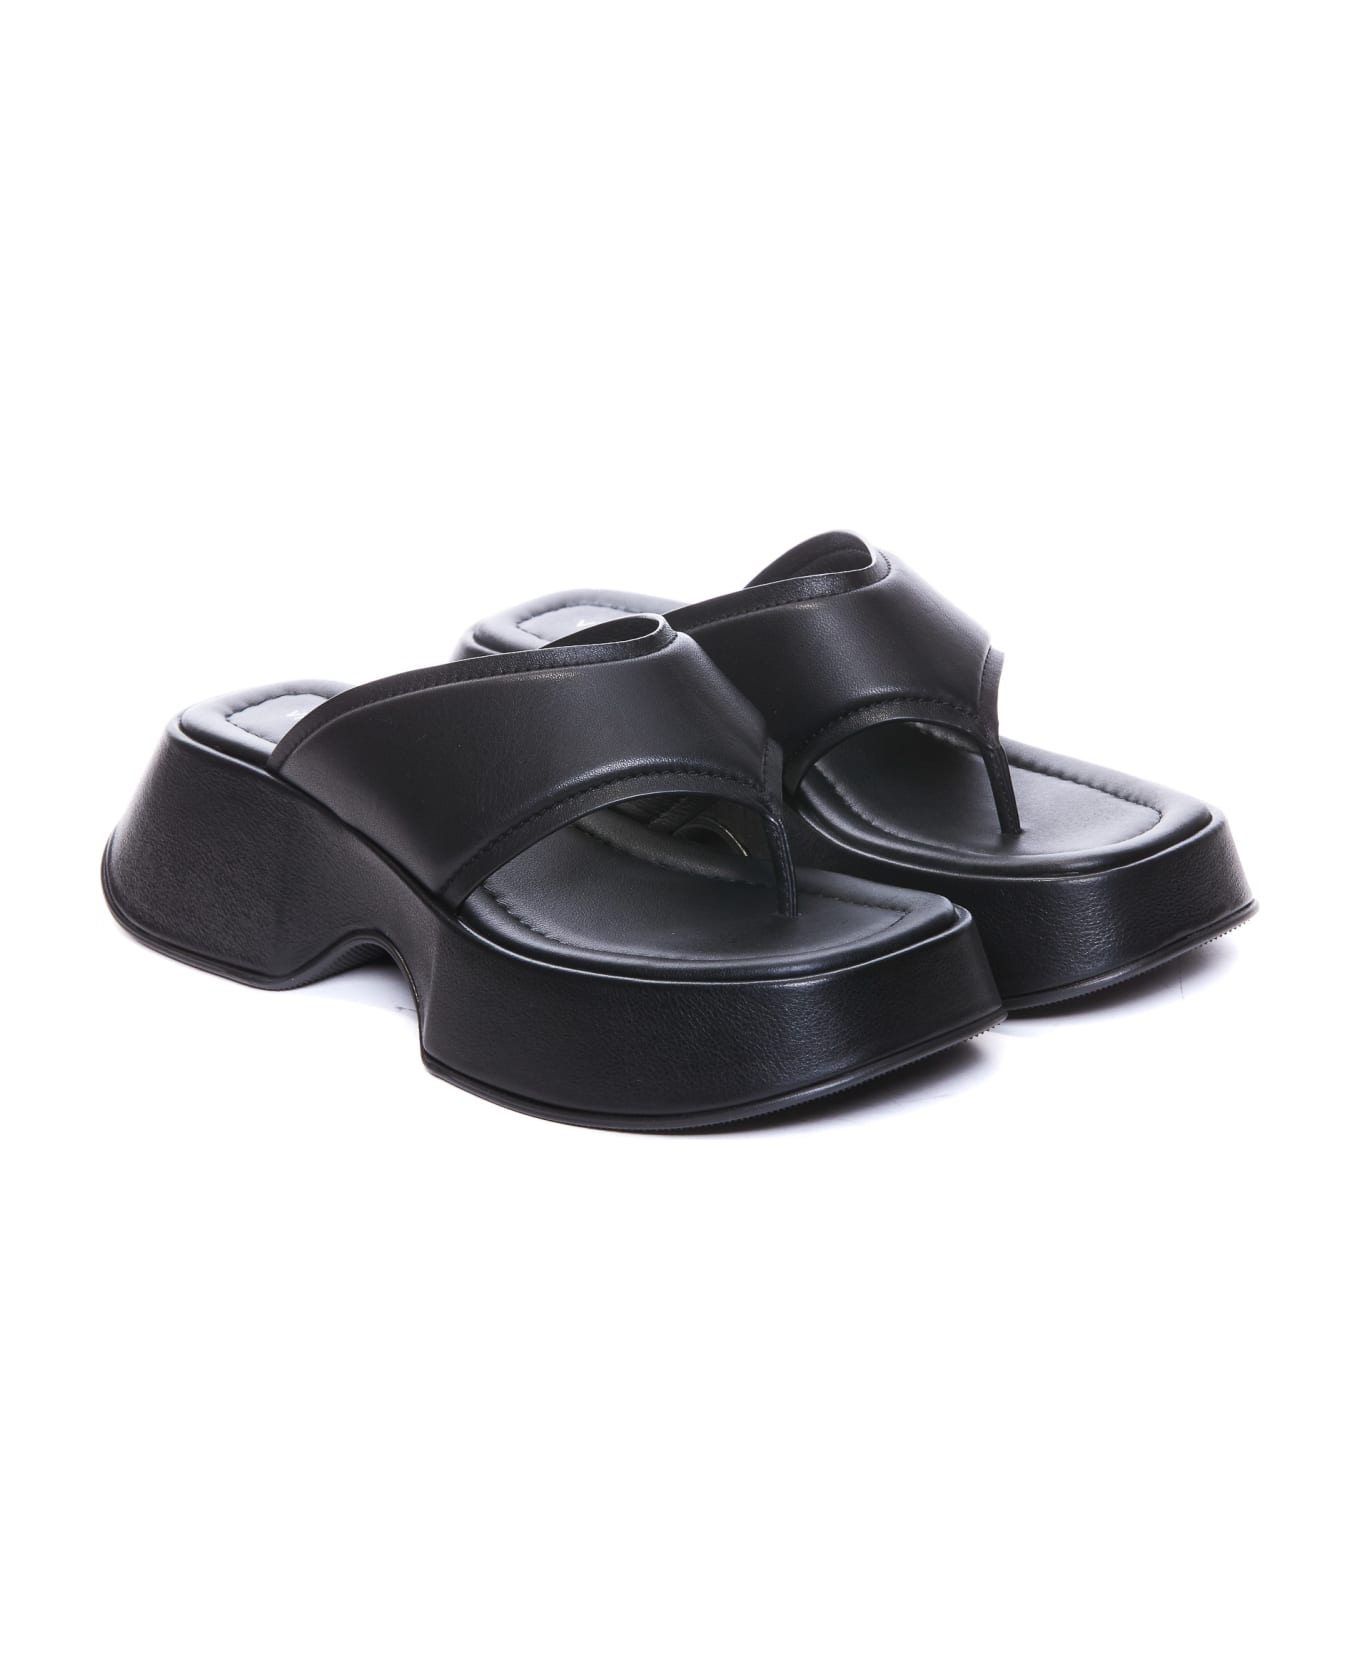 Vic Matié Travel Sandals - Black サンダル